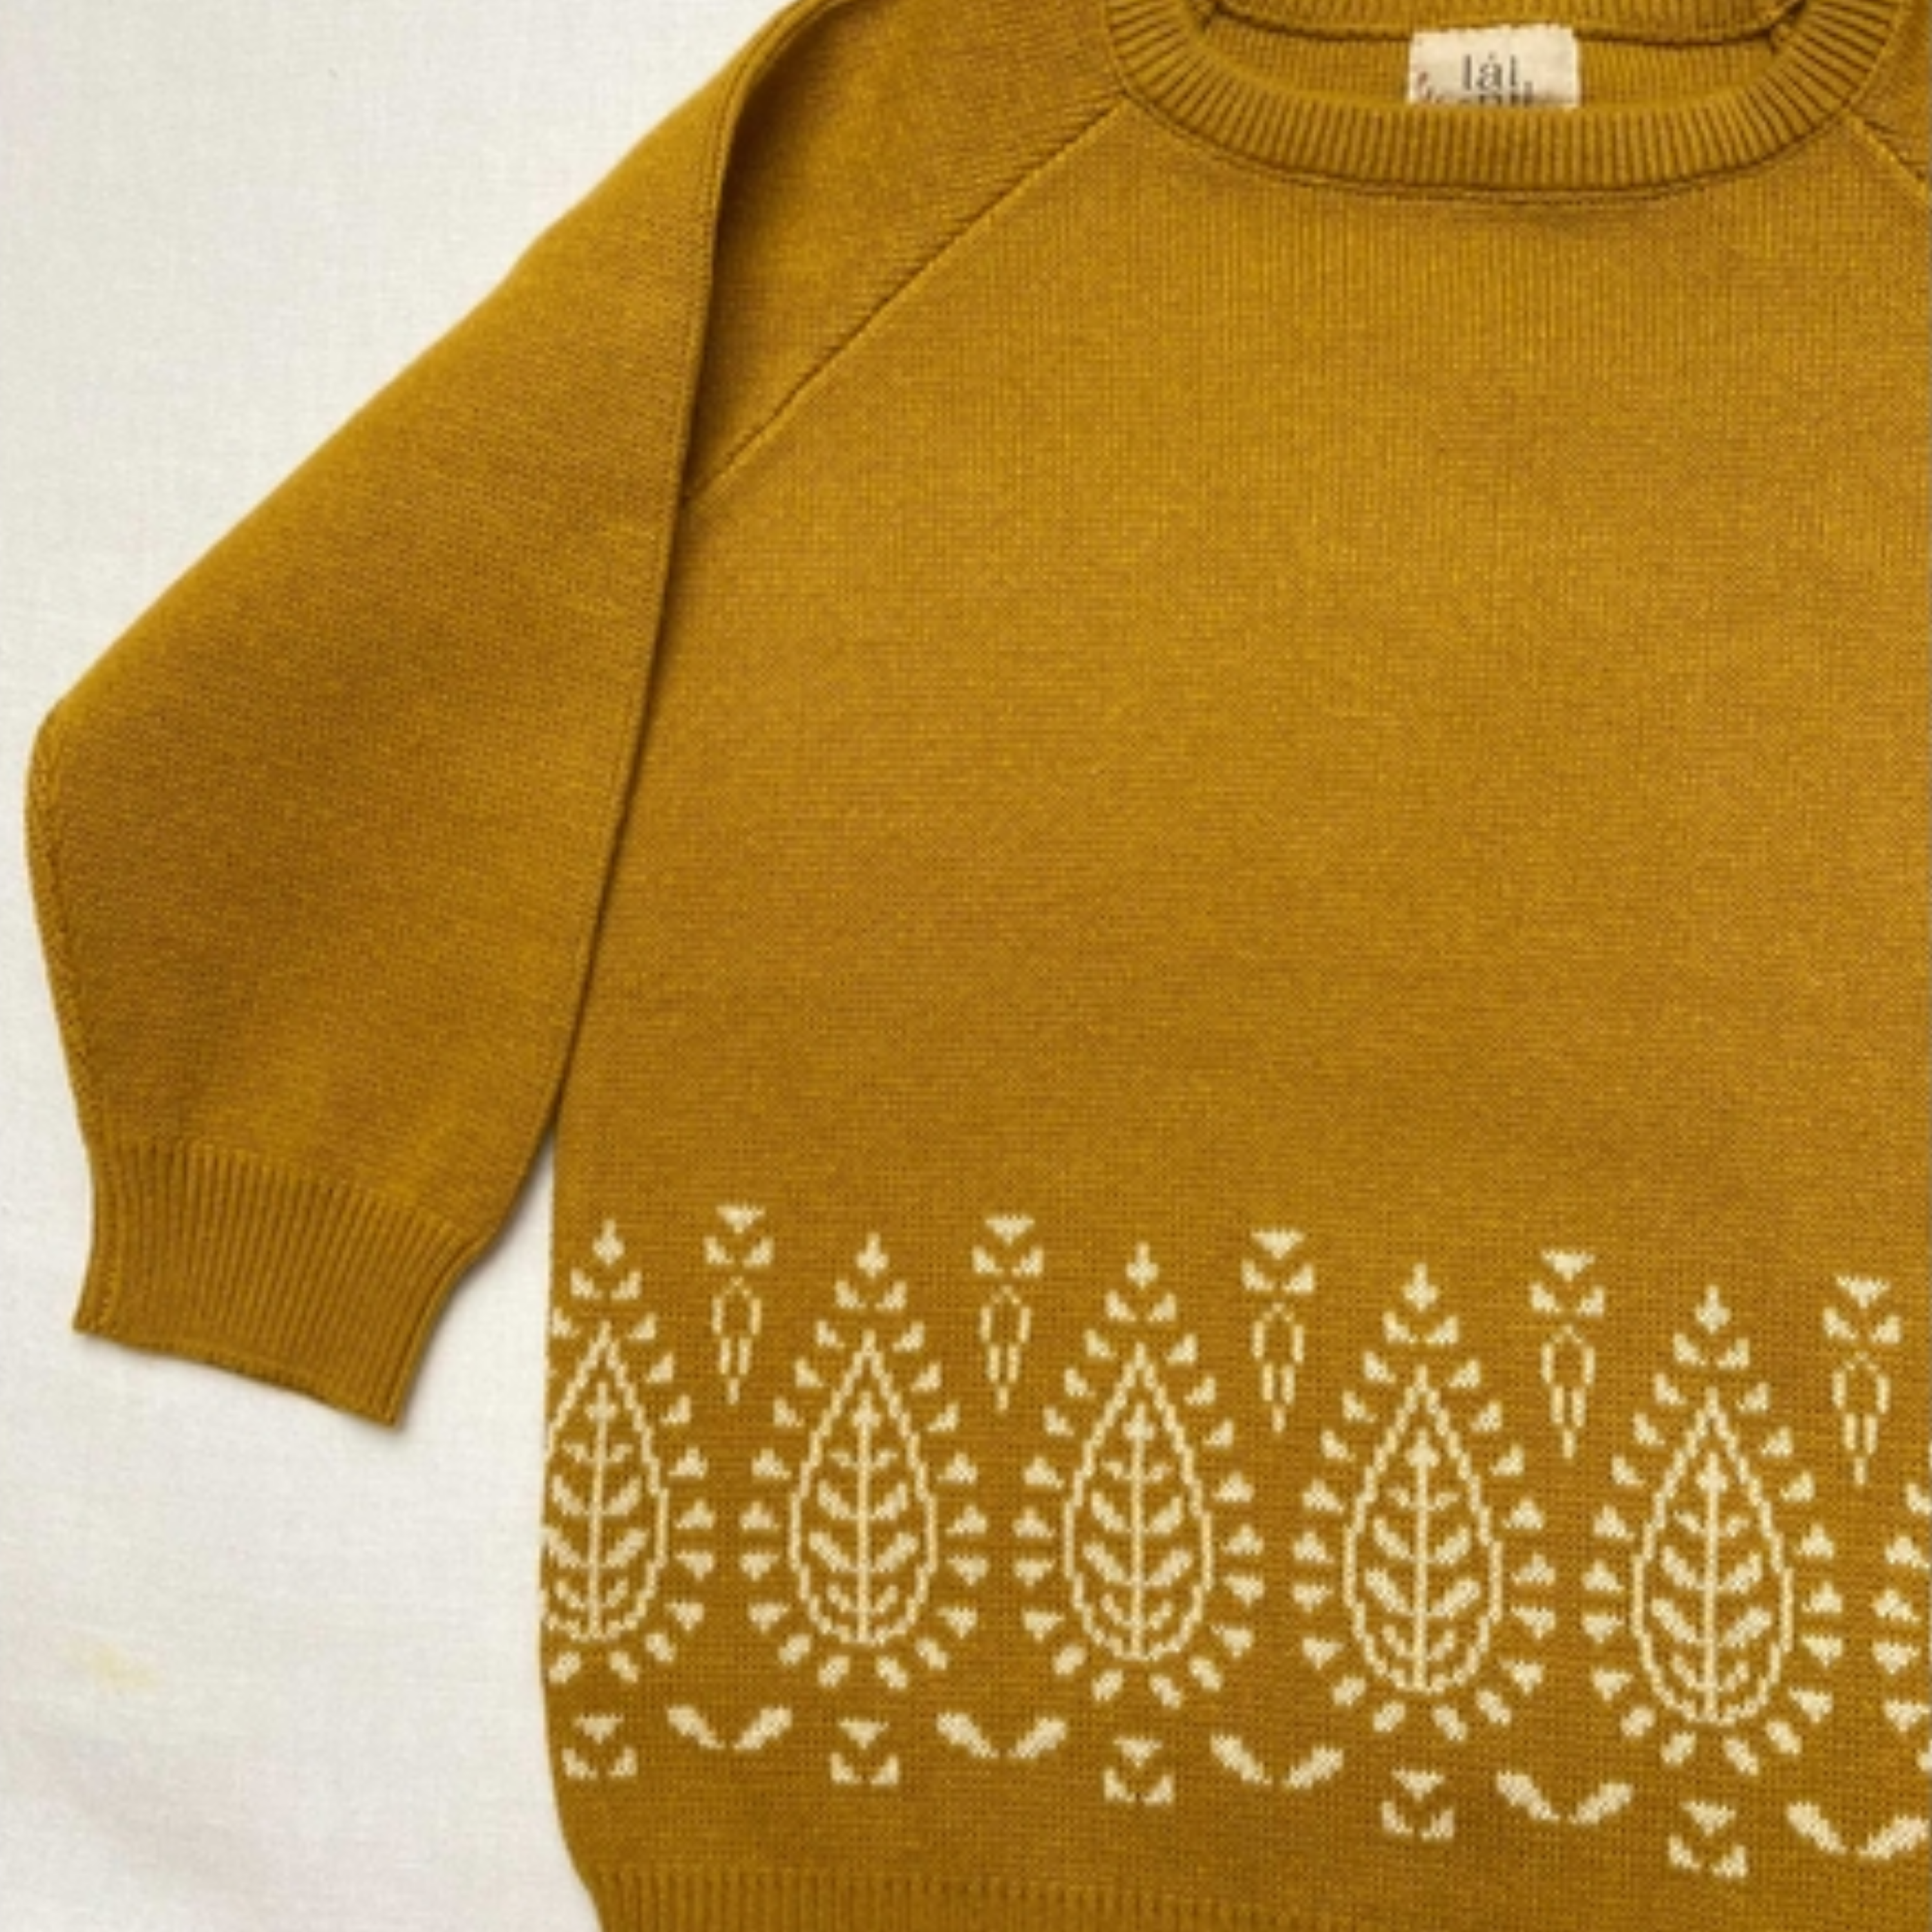 Organic Mustard Sweater